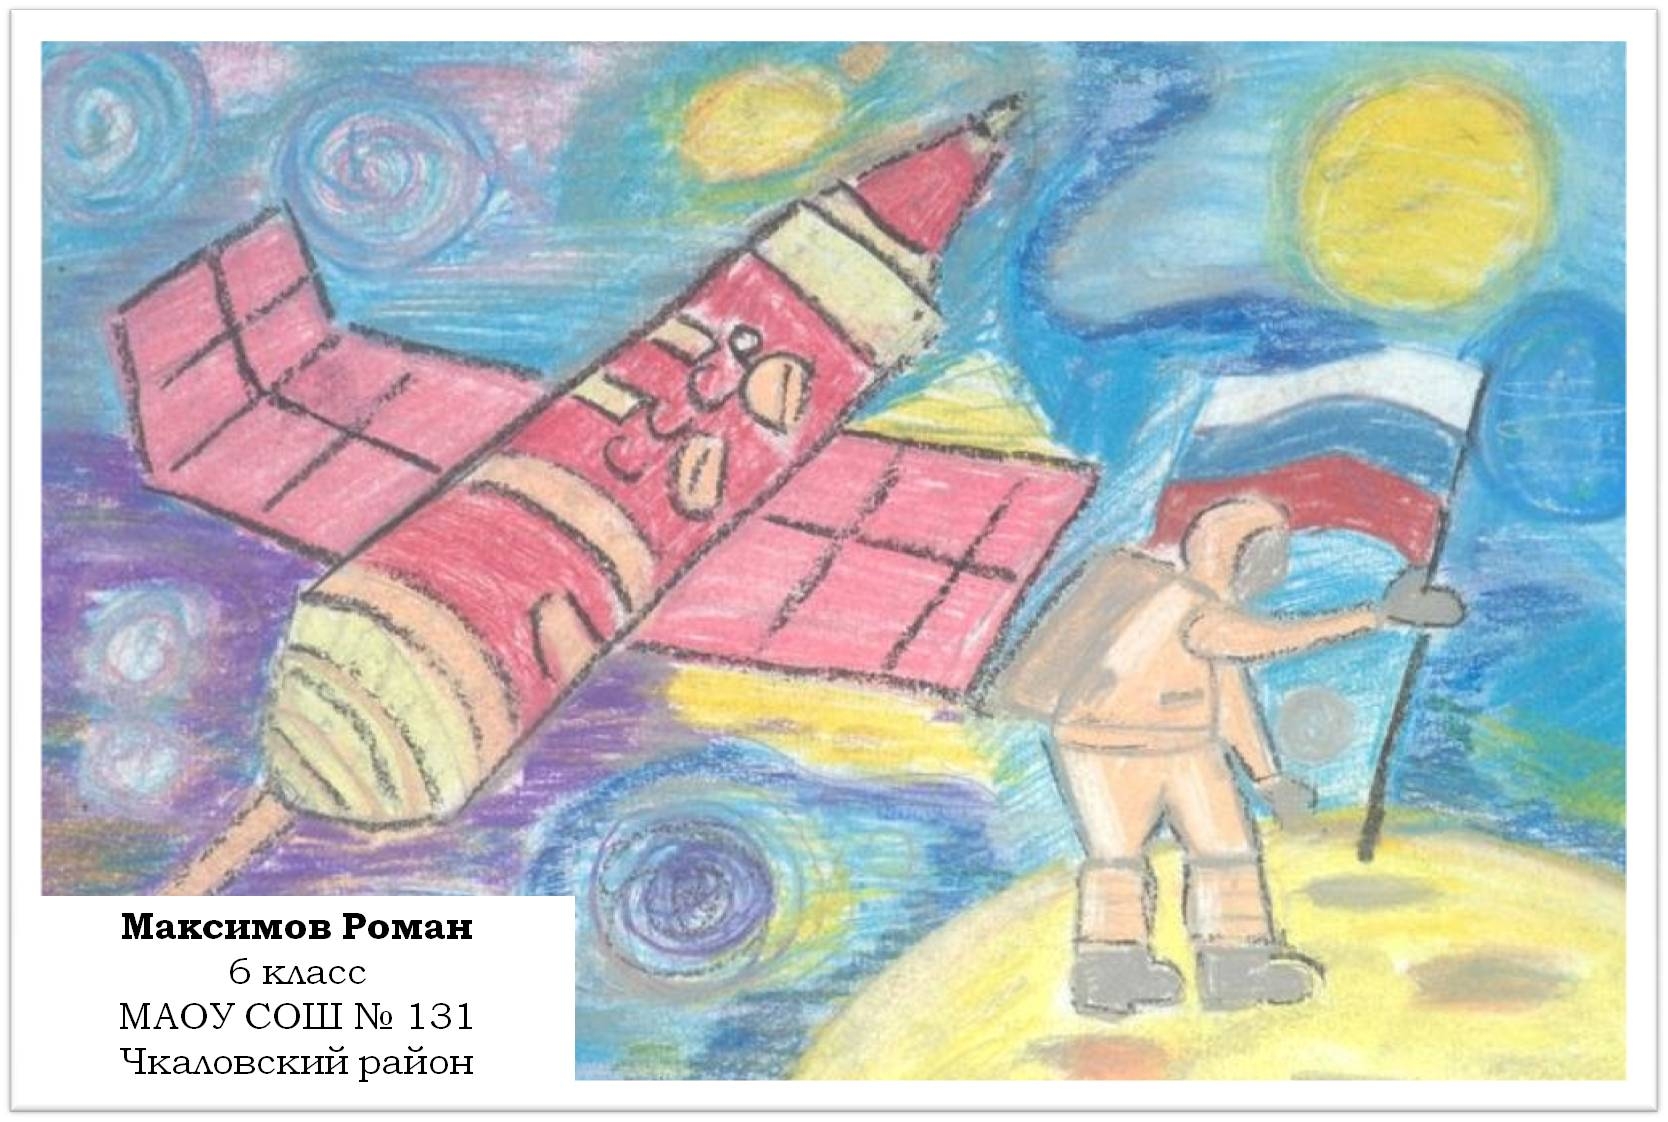 Рисунки о дне космонавтики. Рисунок на тему космос. Рисунок на тему космонавтики. Рисунок на космическую тему. Рисунок на тему день космонавтики.